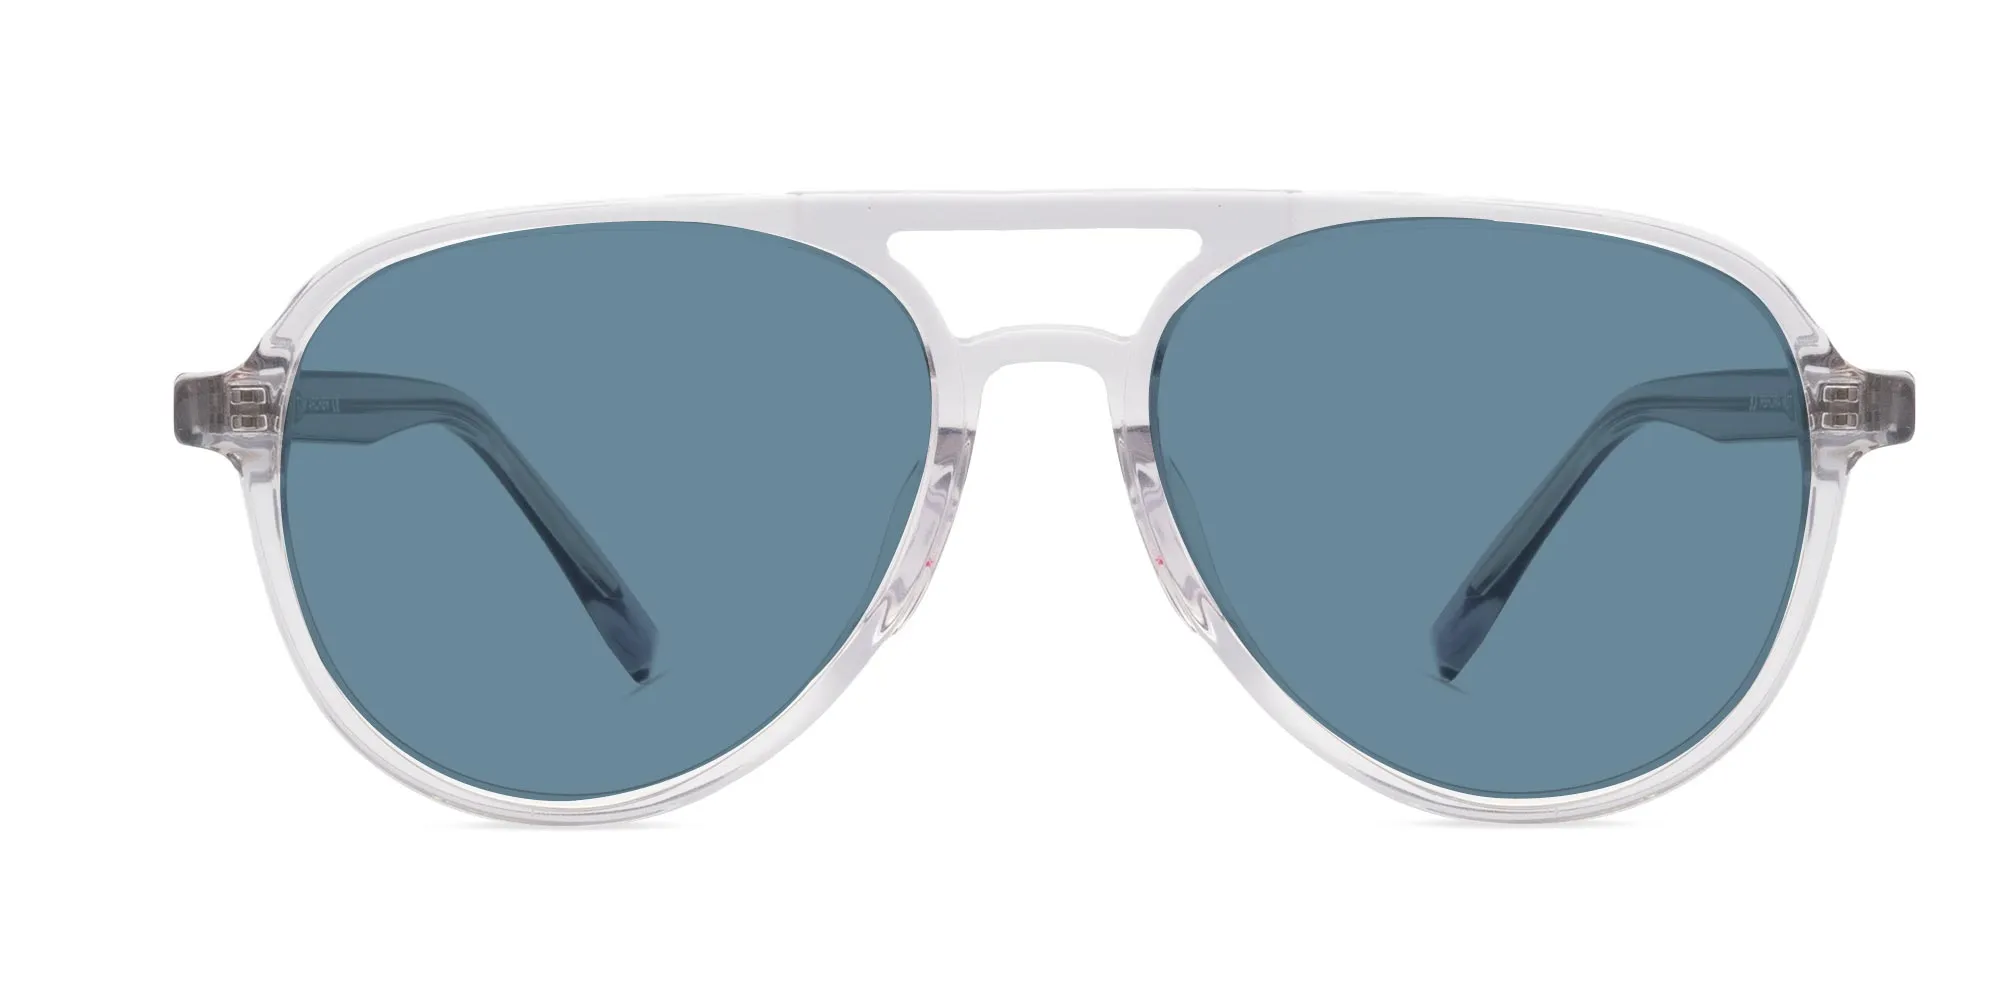 Pilot Sunglasses With Blue Tint-2